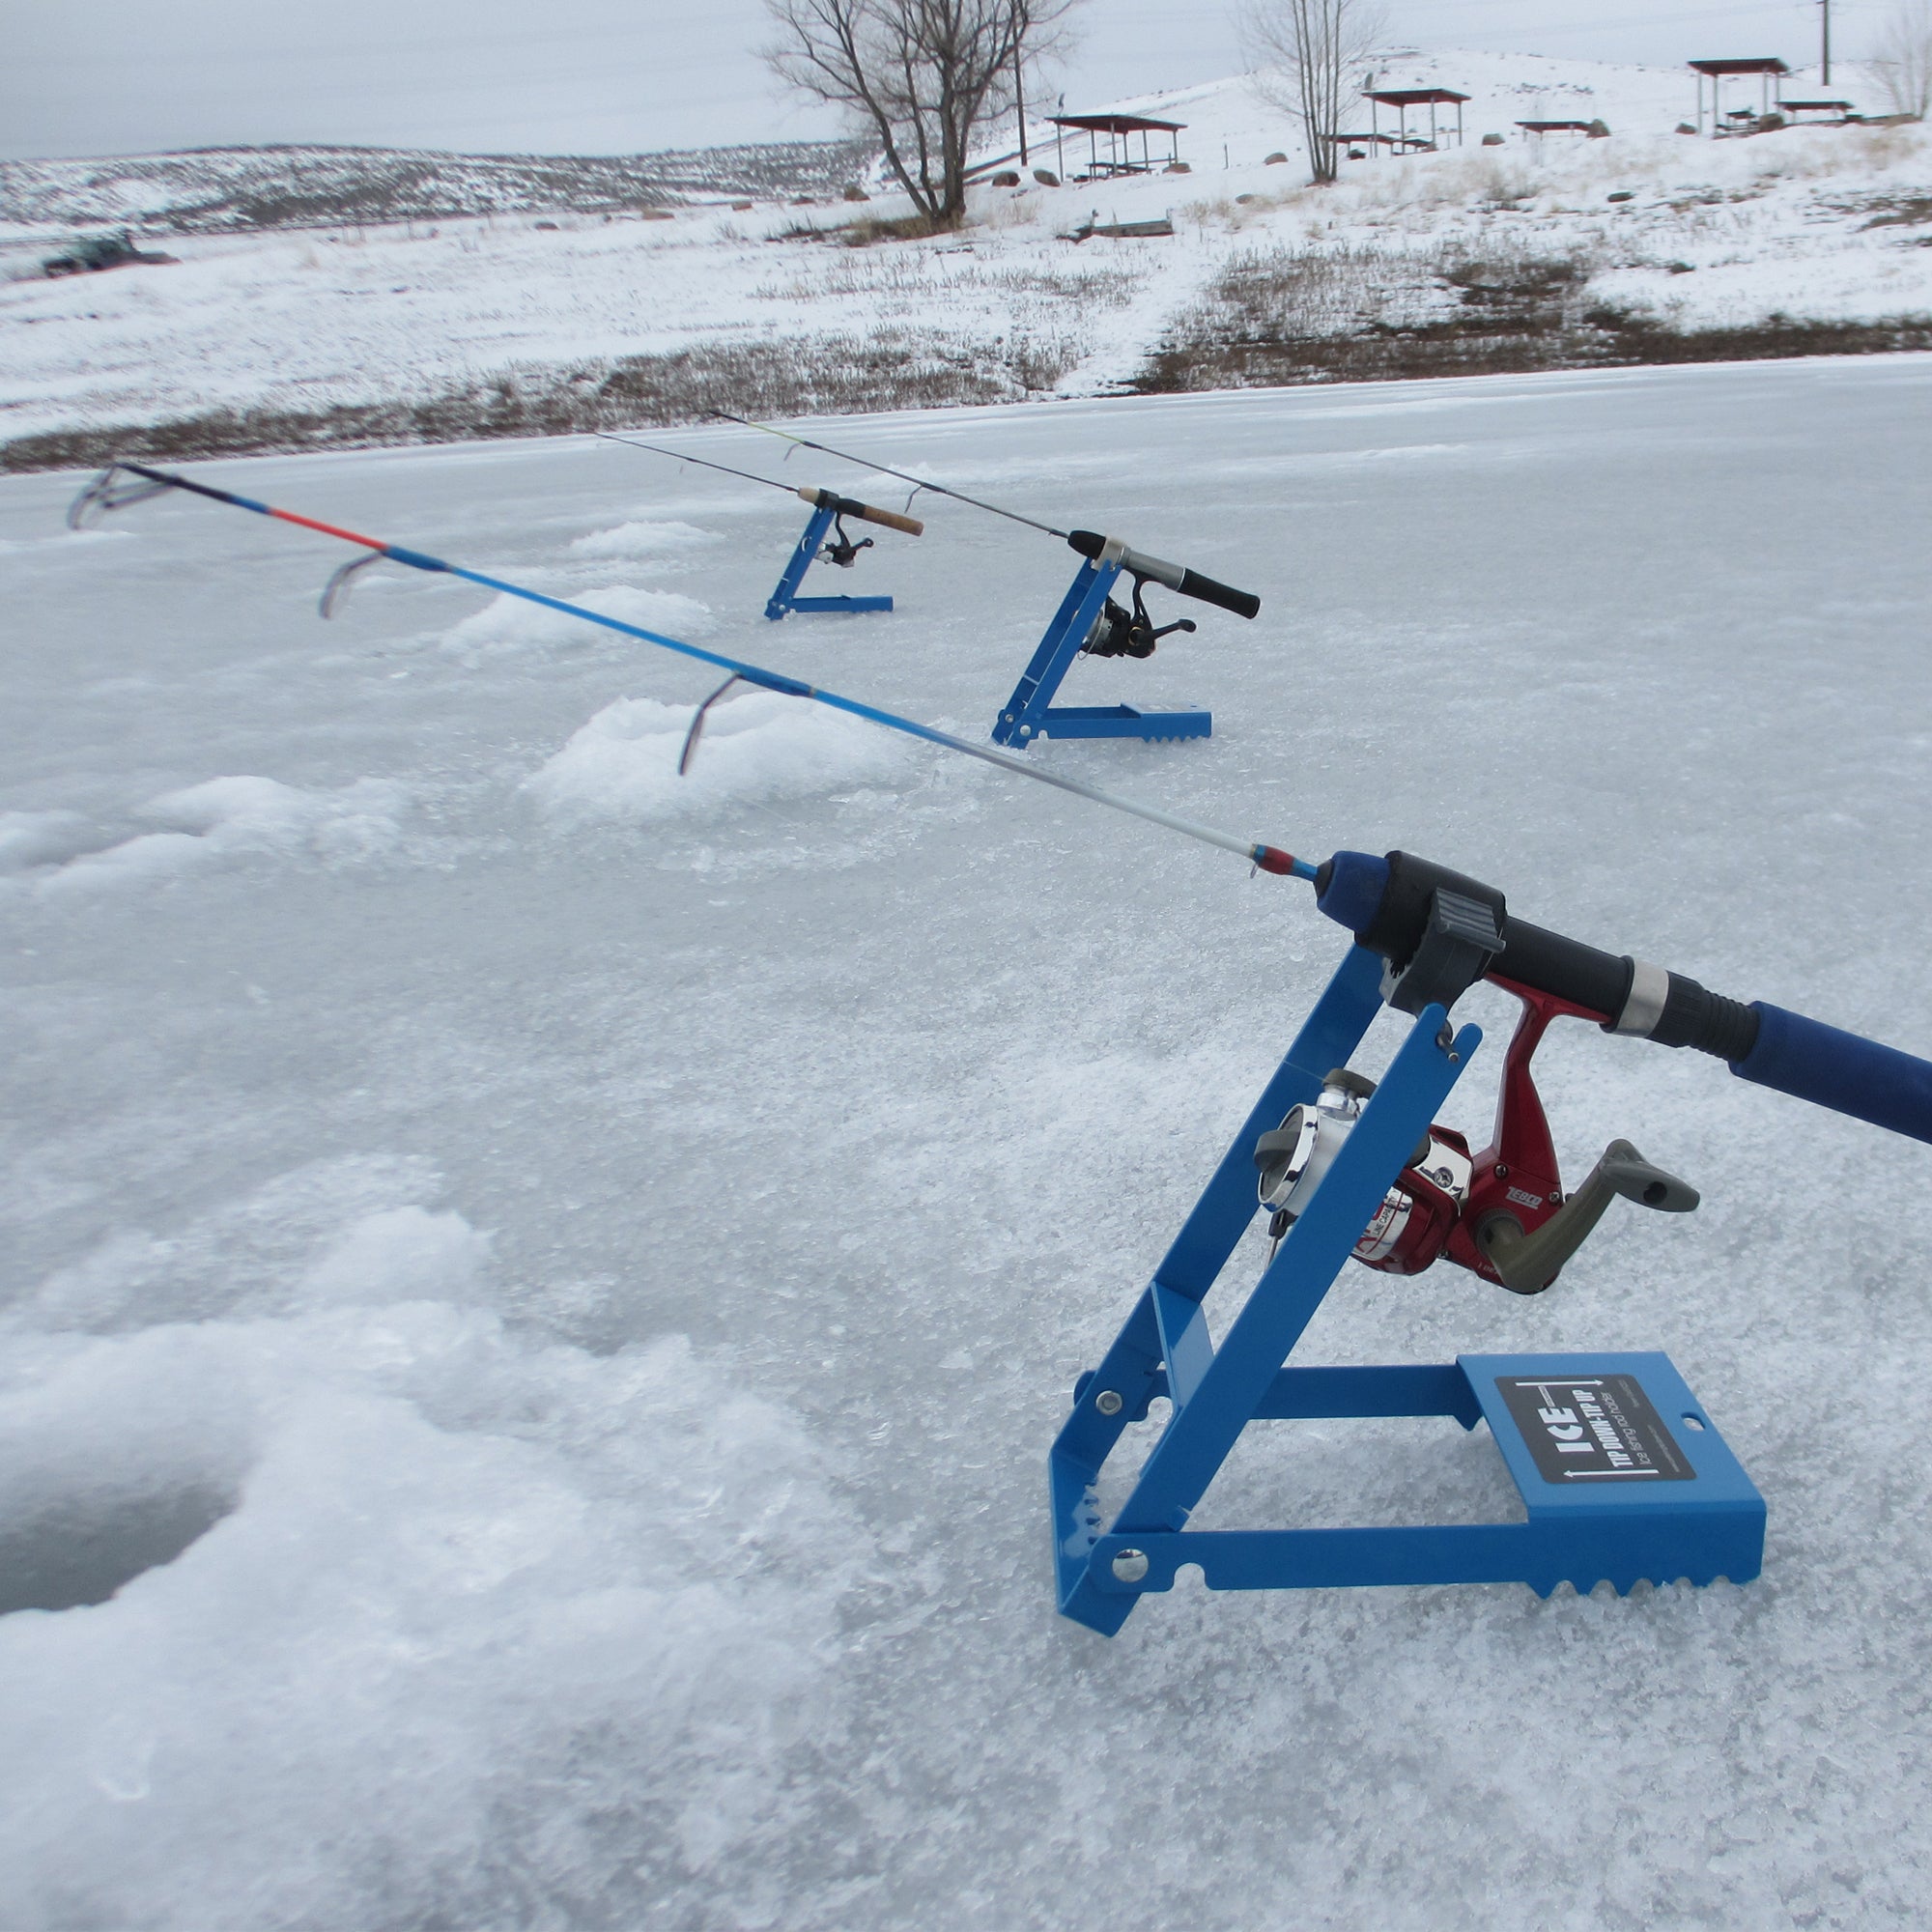 Homemade Ice Rod Holder- DIY Ice Fishing Tackle 